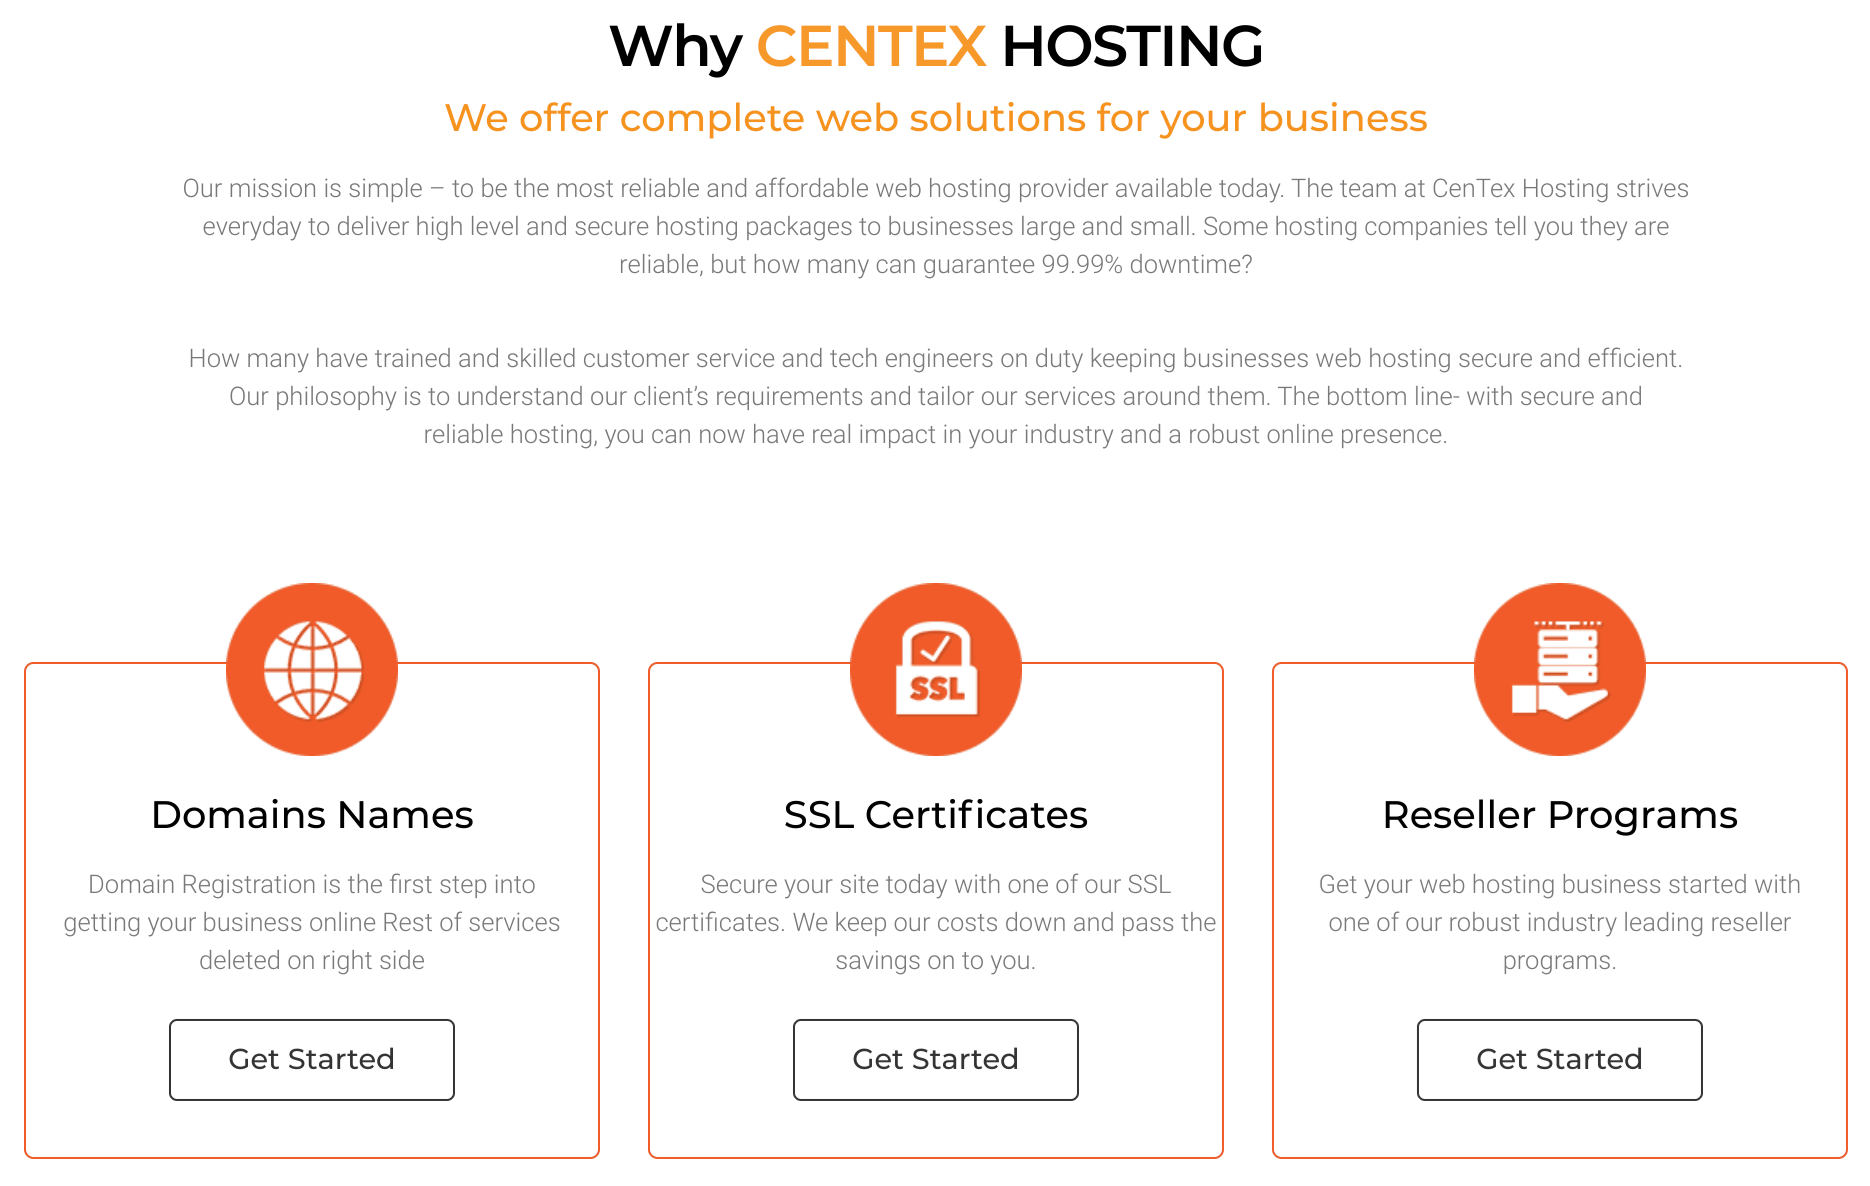 centex hosting features